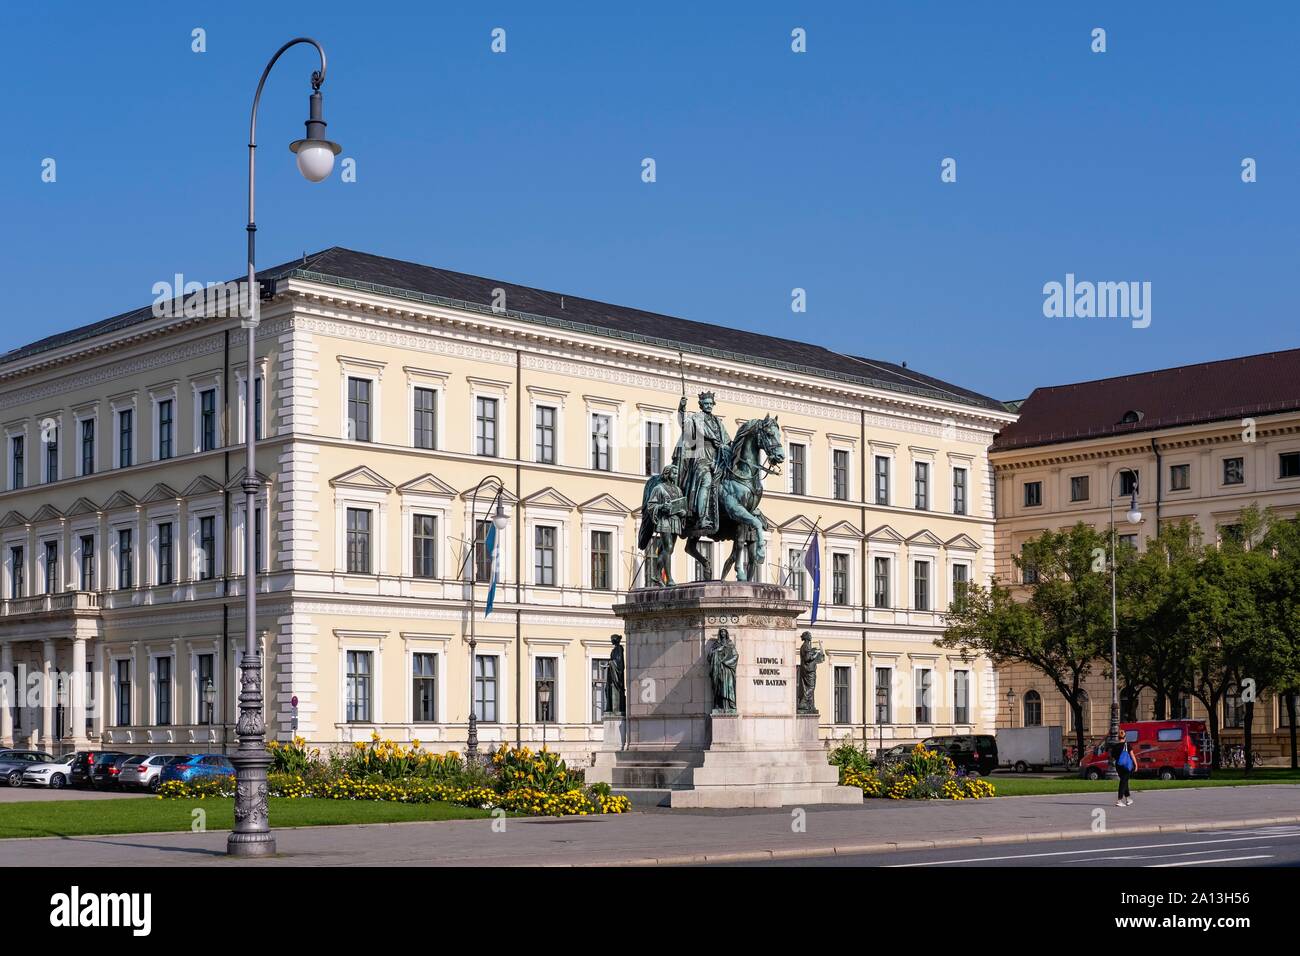 Equestrian statue of King Ludwig I and Palais Leuchtenberg, Odeonsplatz, Old Town, Munich, Upper Bavaria, Bavaria, Germany Stock Photo